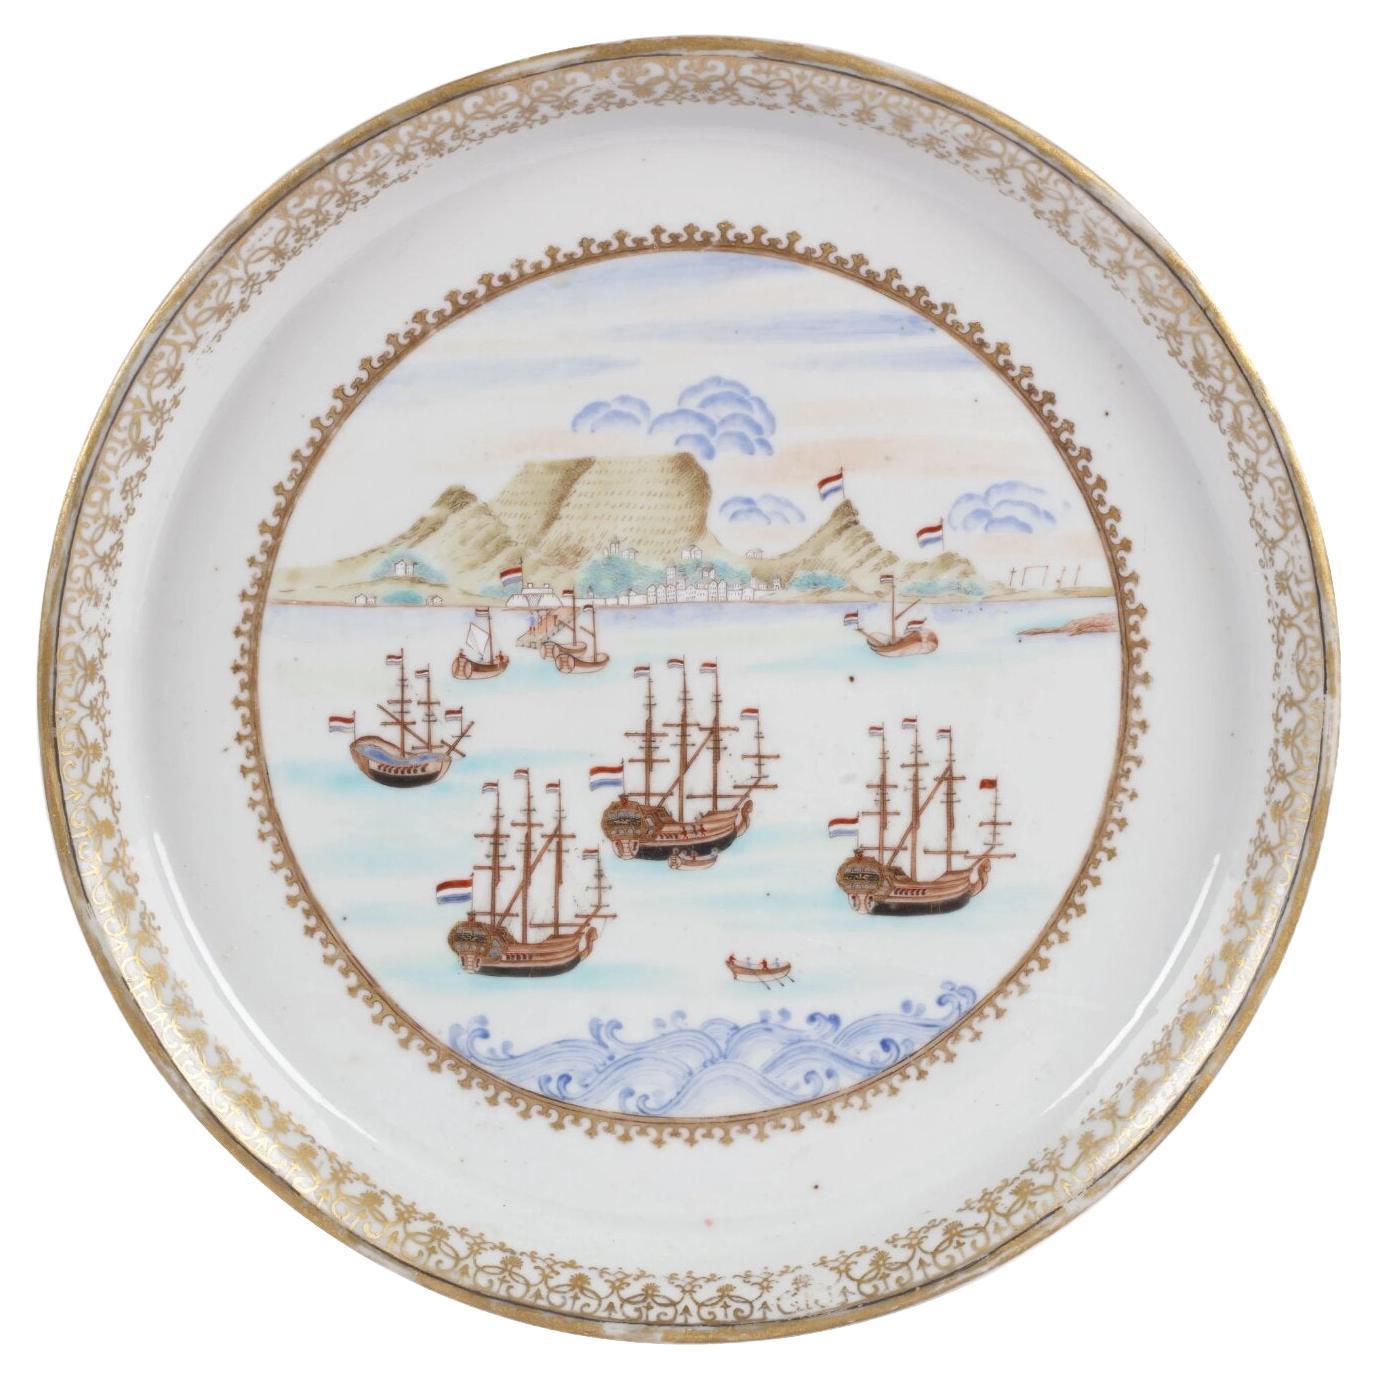 Seltener großer chinesischer Export-Porzellan „Table Bay“ Cape of Good Hope-Schale aus Porzellan, um 1740